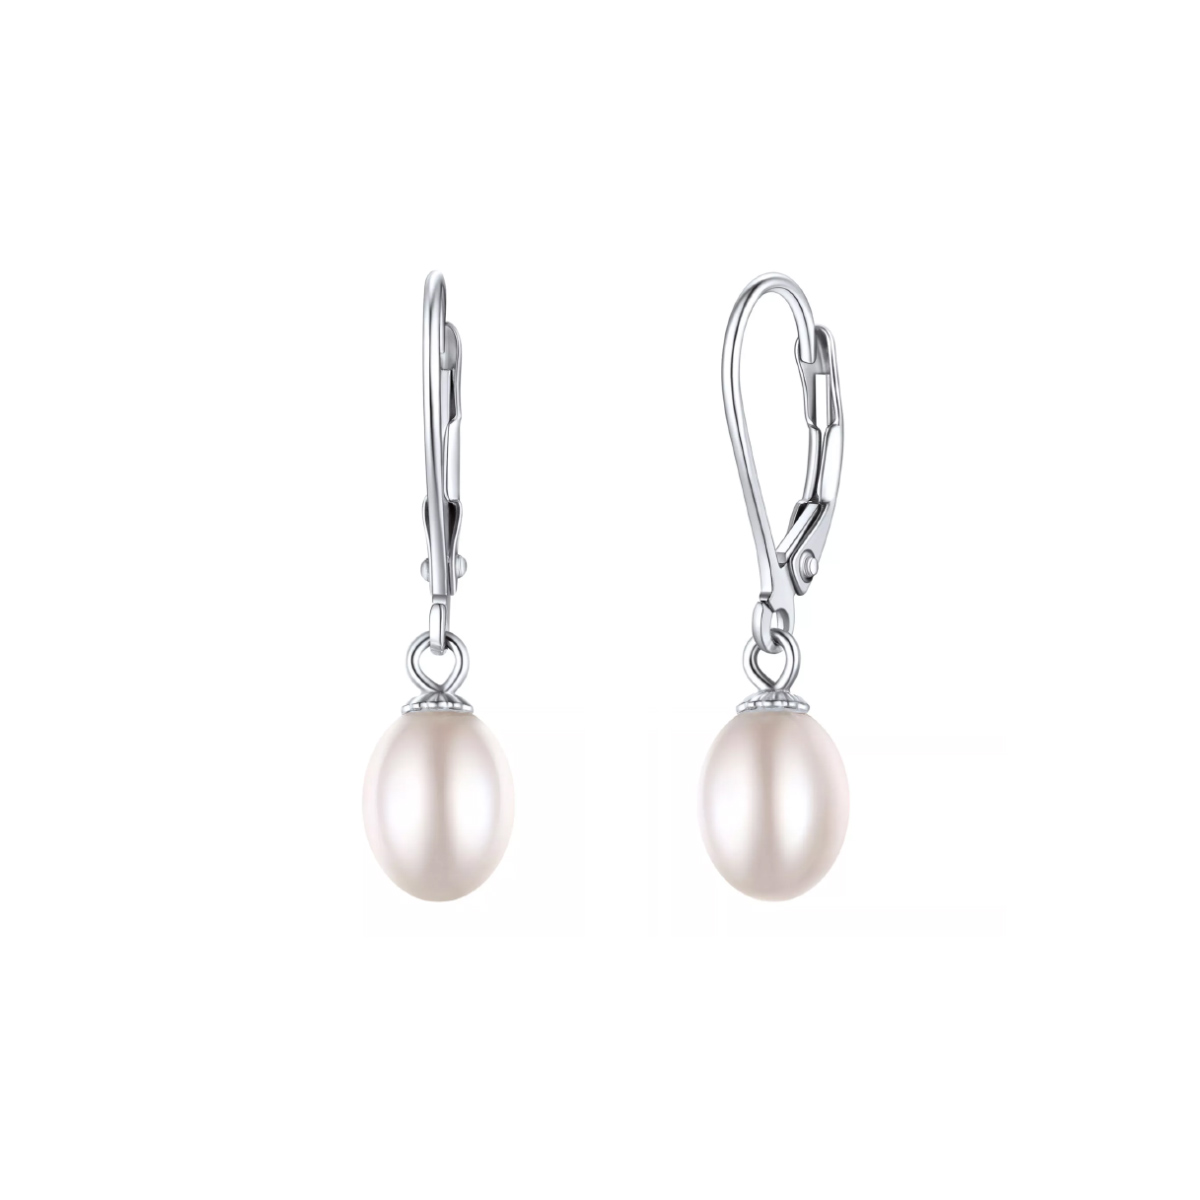 ChicSilver Sterling Silver Freshwater Pearl Dangle Earrings For Women Girl